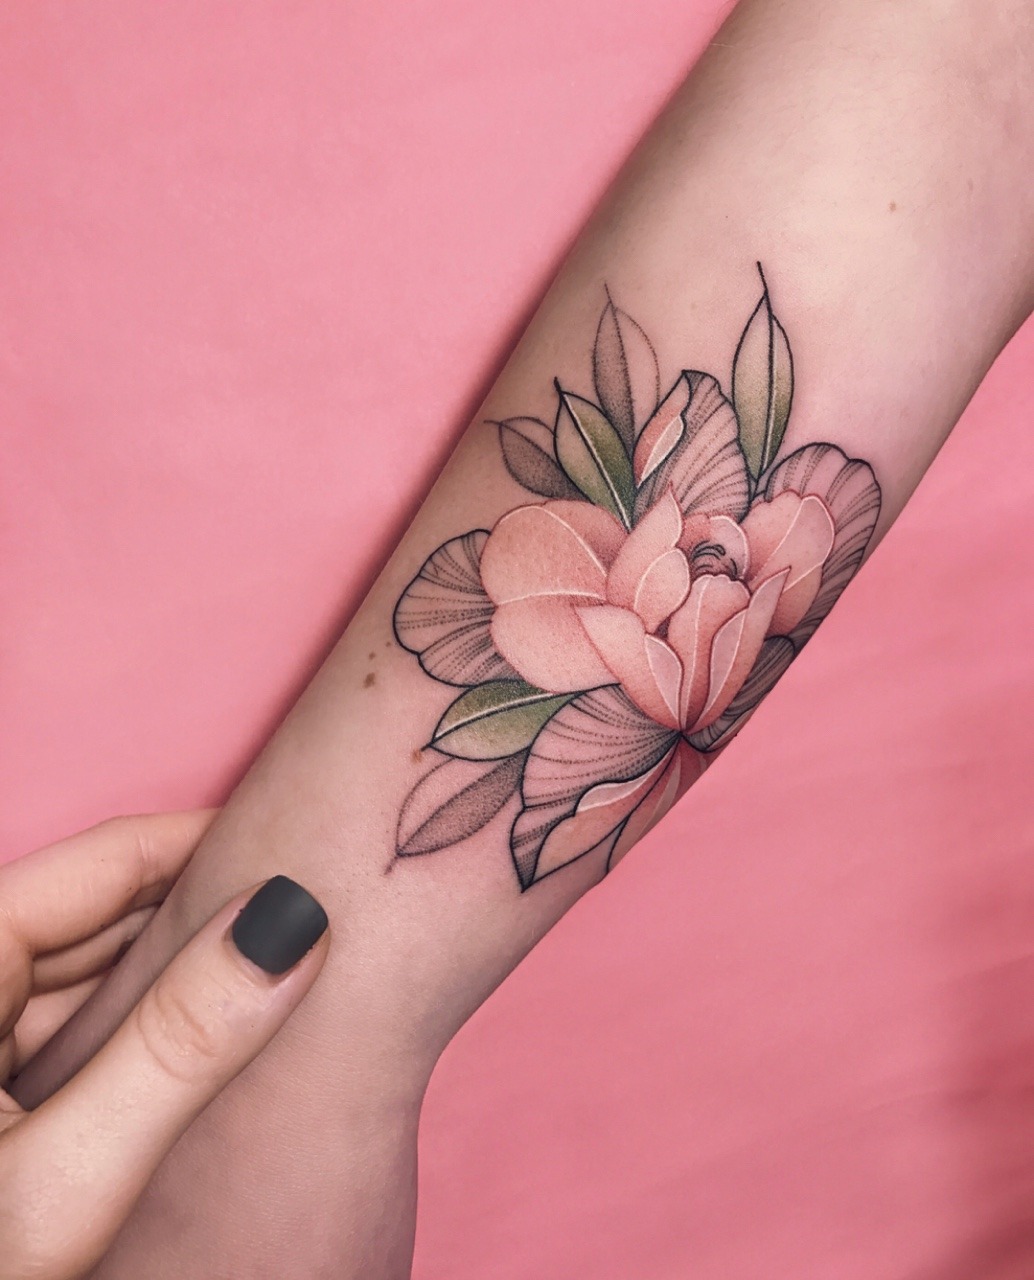 Tattoo ideas - Tumblr Blog Gallery